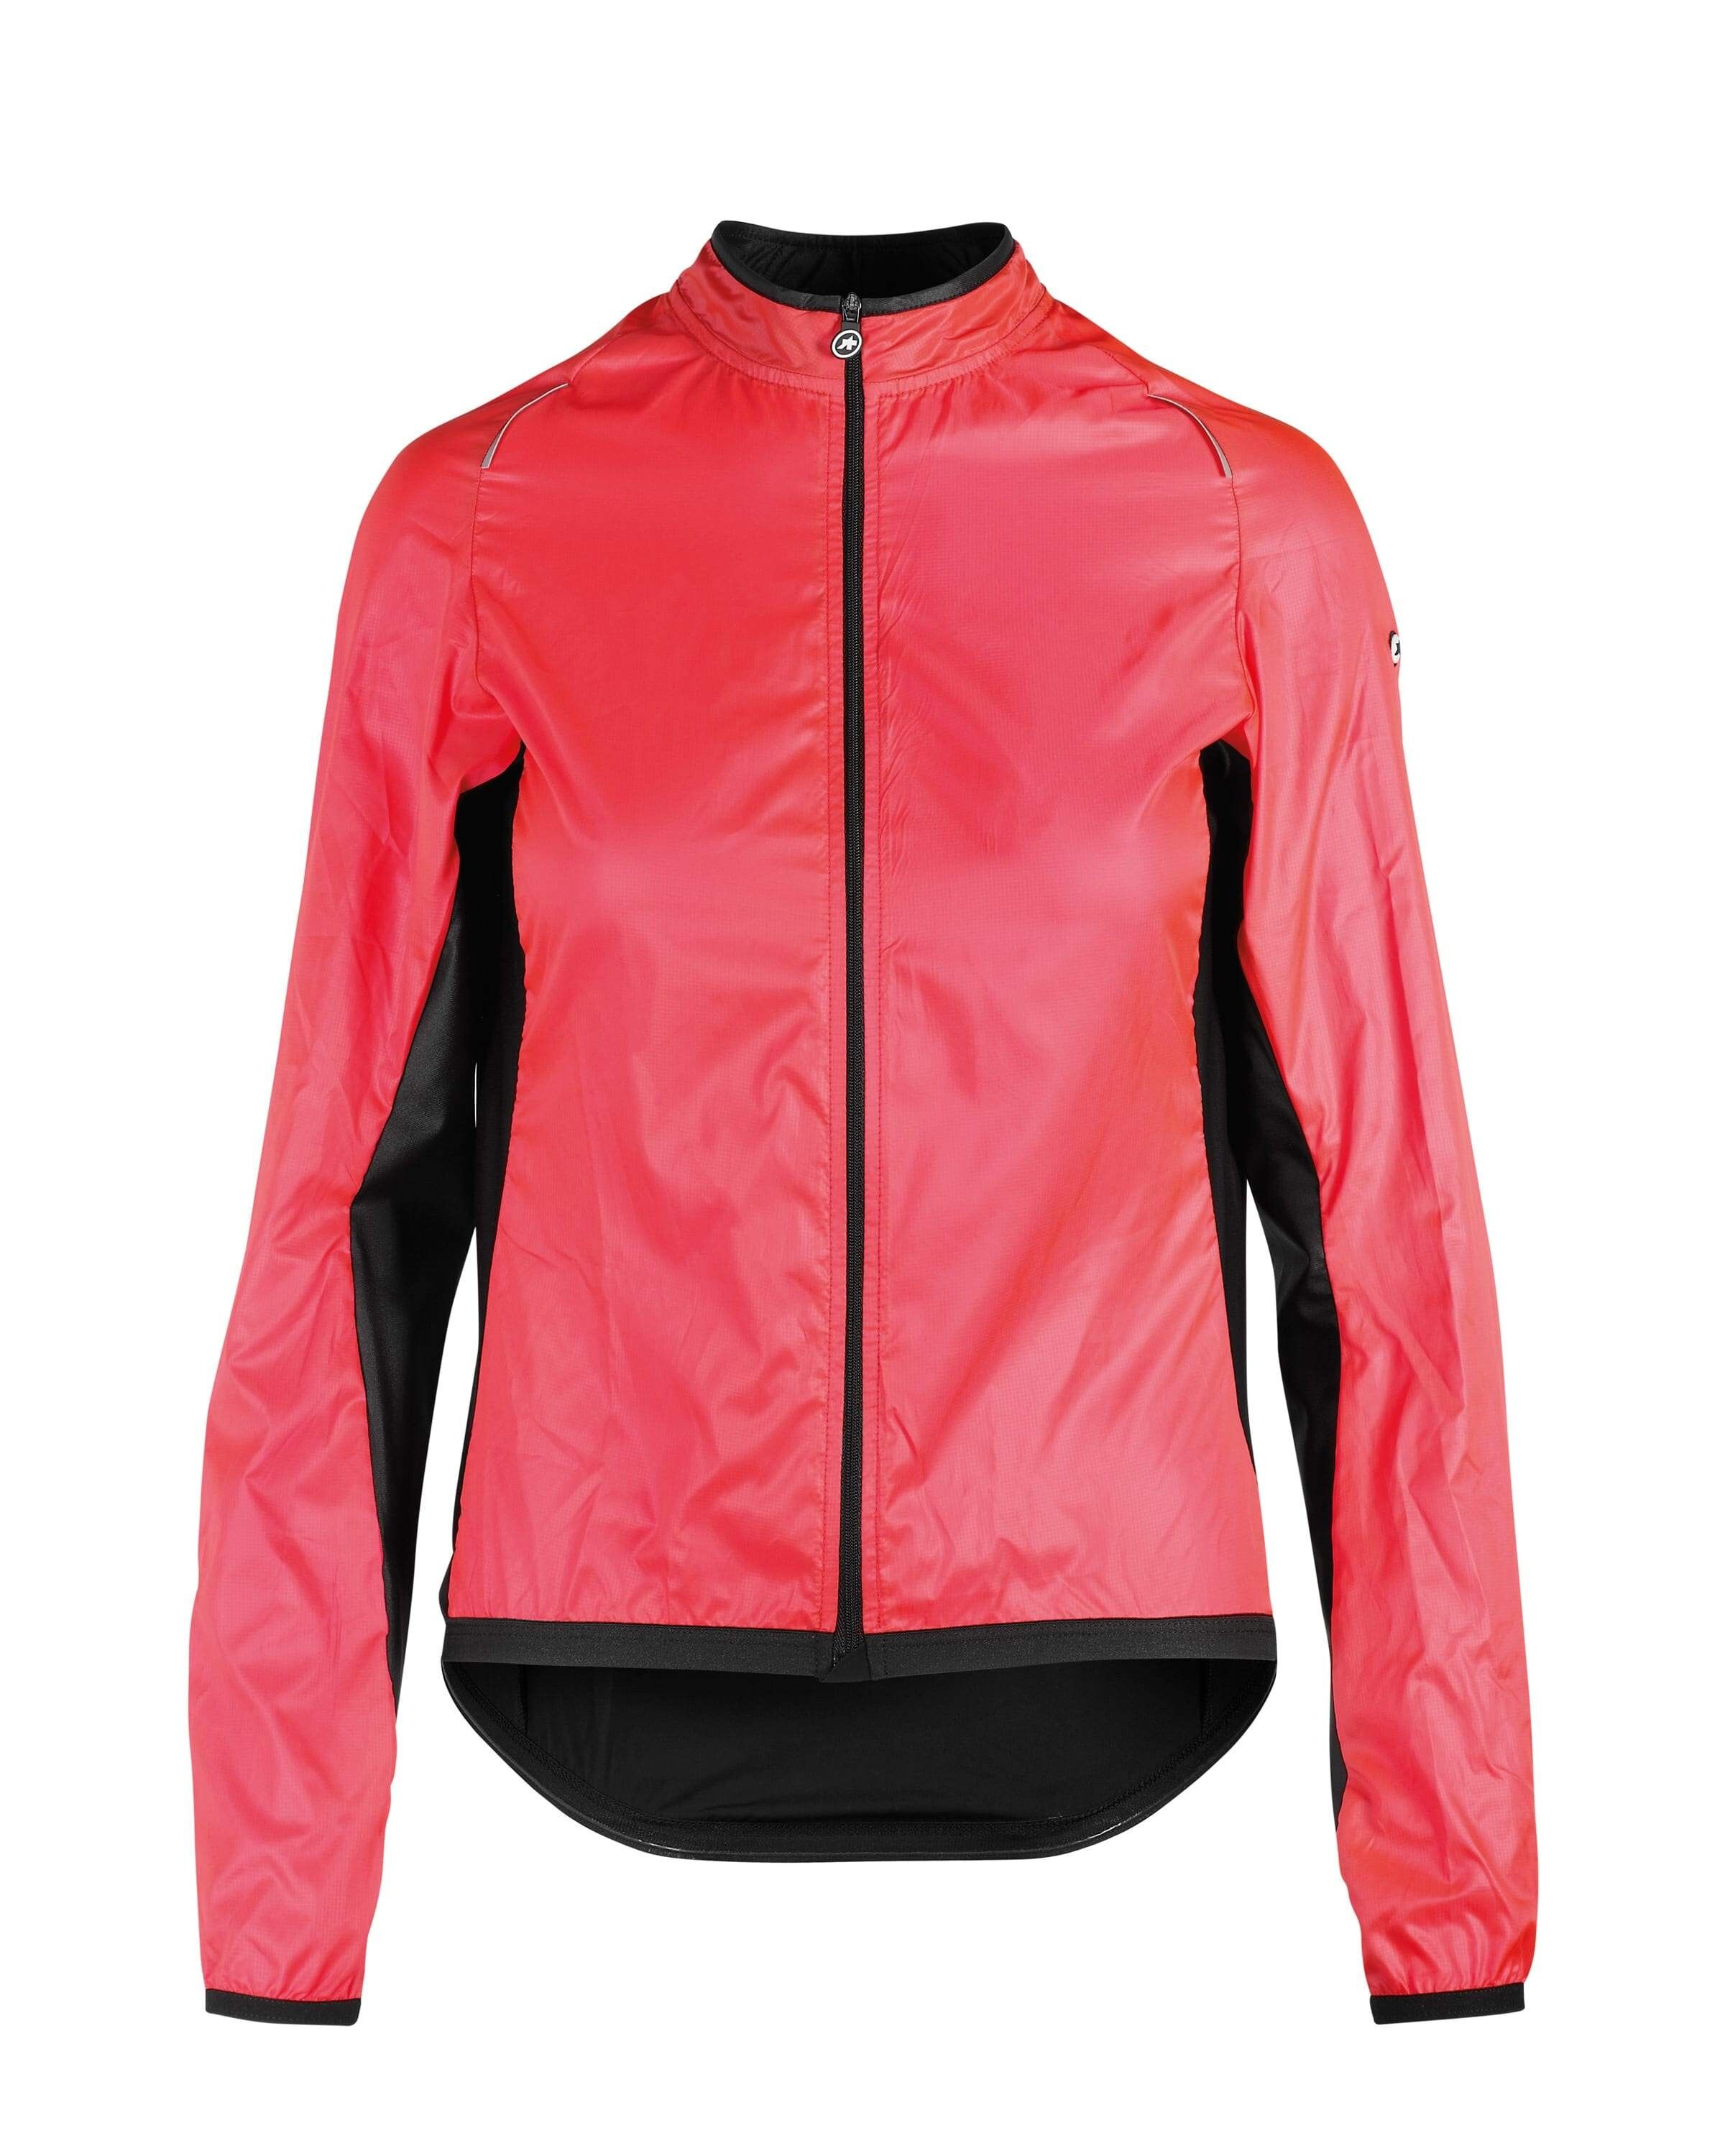 Assos Uma GT Wind Jacket - Cycling windproof jacket - Women's